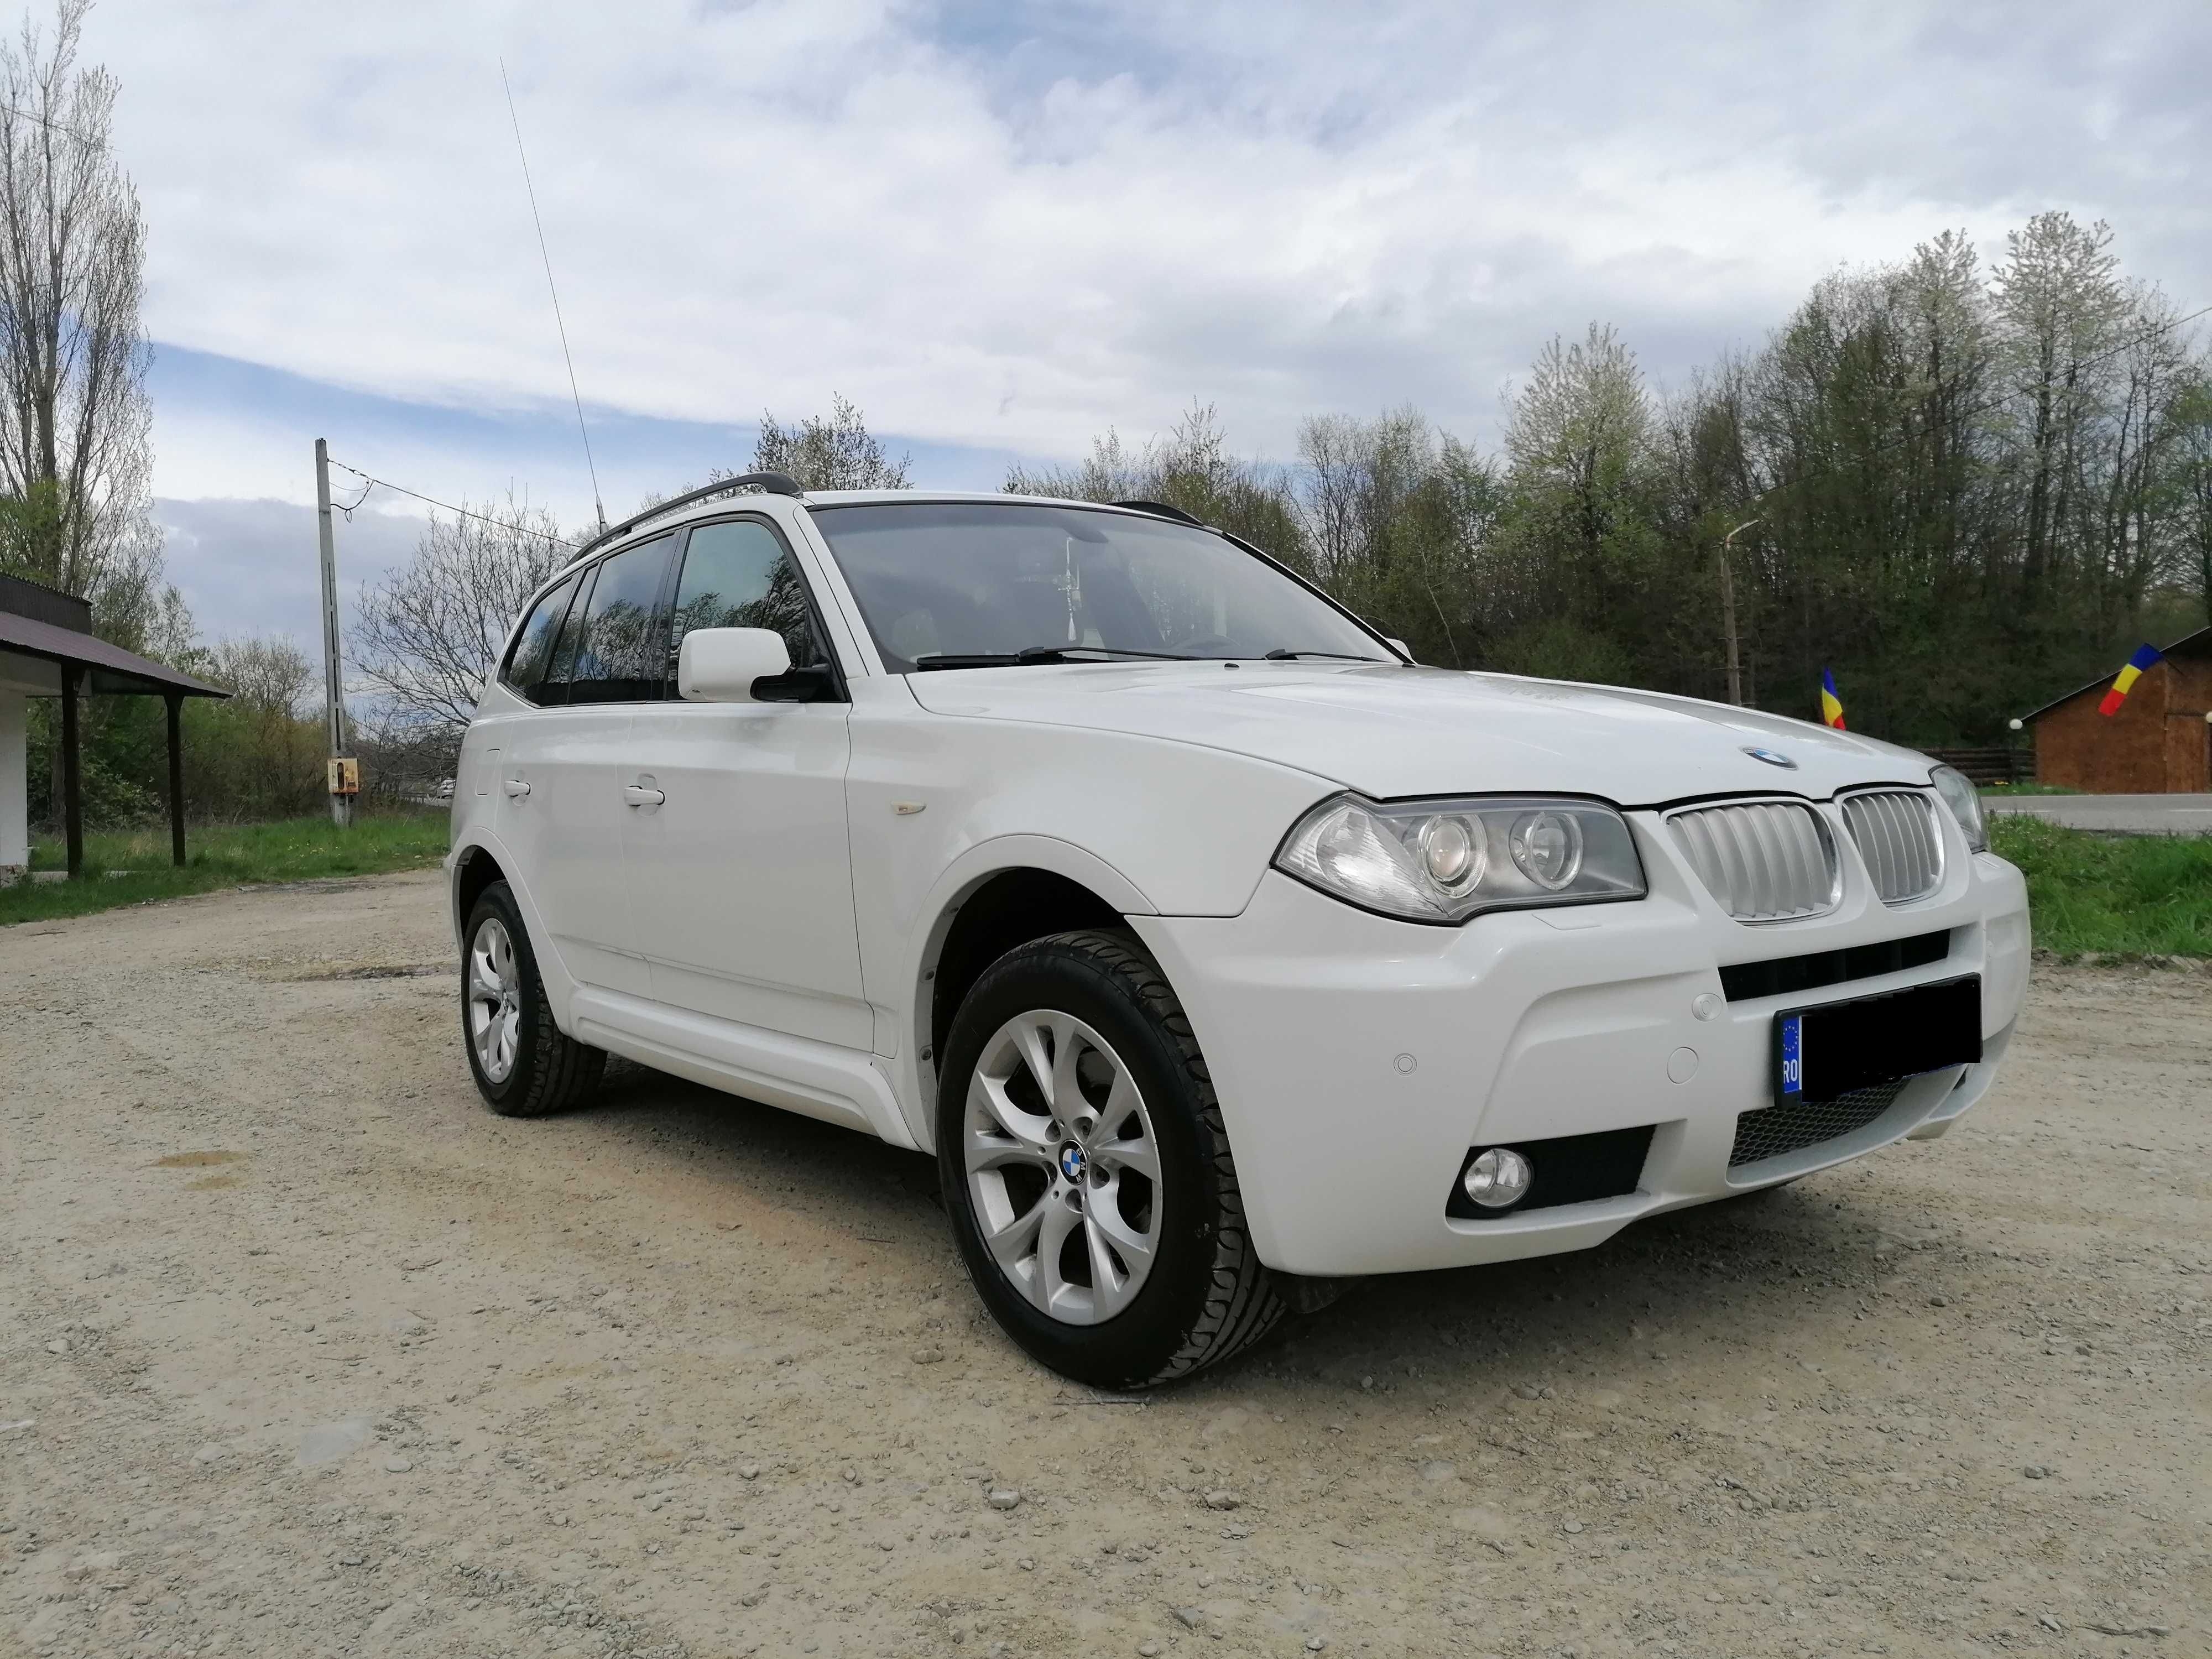 BMW X3 Xdrive 2.0 diesel 177 cp Piatra Neamt • OLX.ro